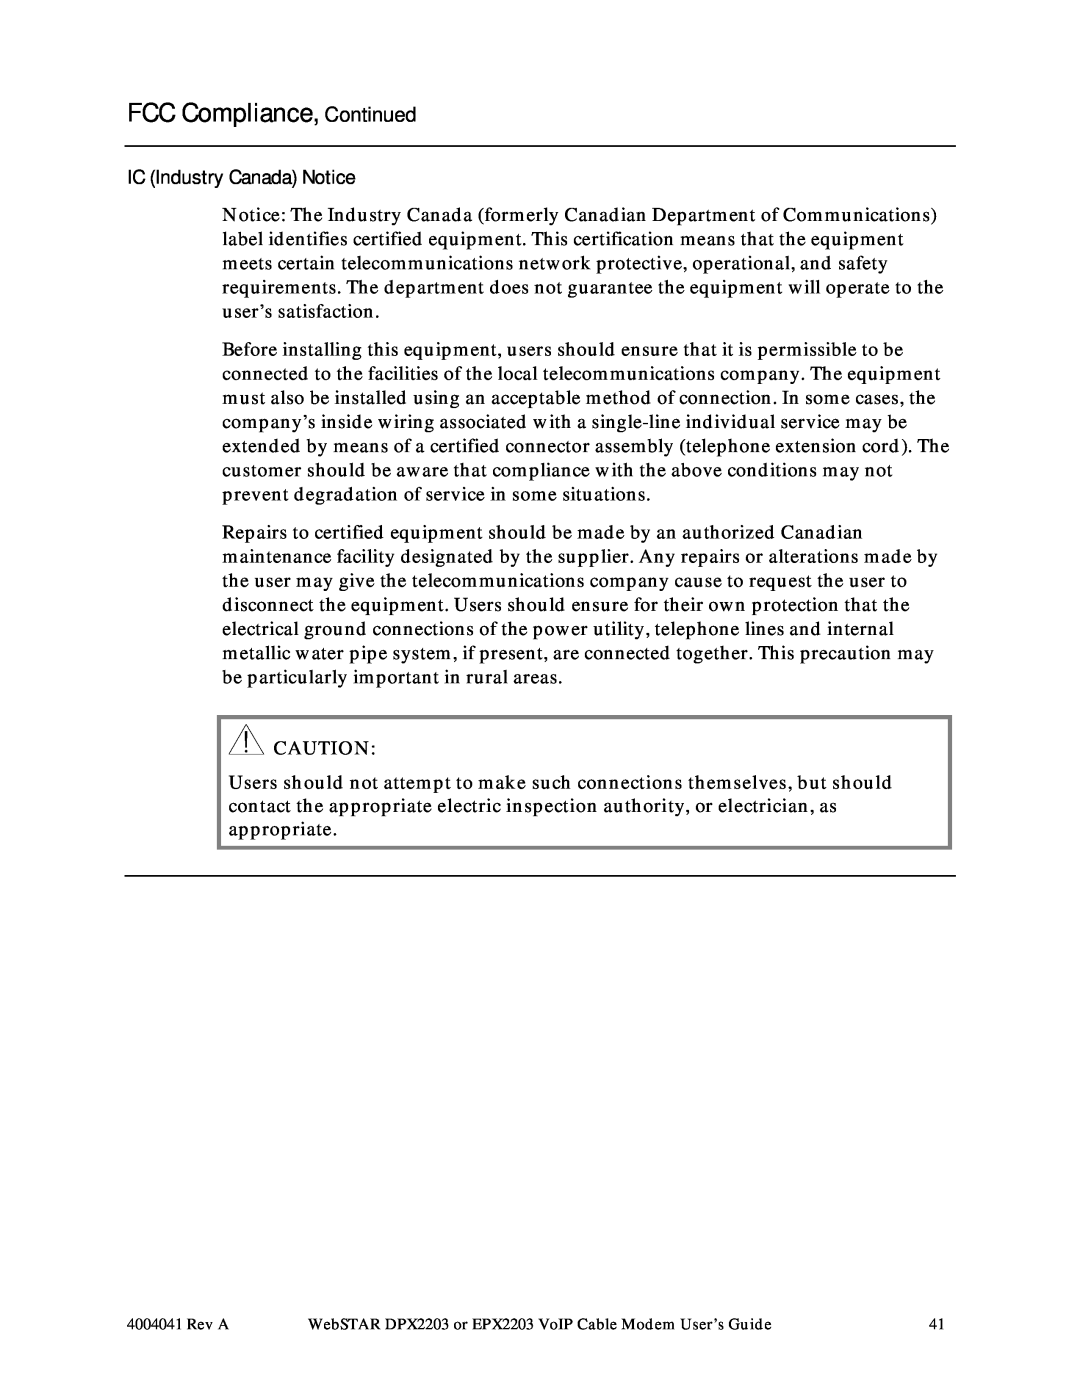 Scientific Atlanta DPX2203, EPX2203 manual IC Industry Canada Notice, FCC Compliance, Continued 